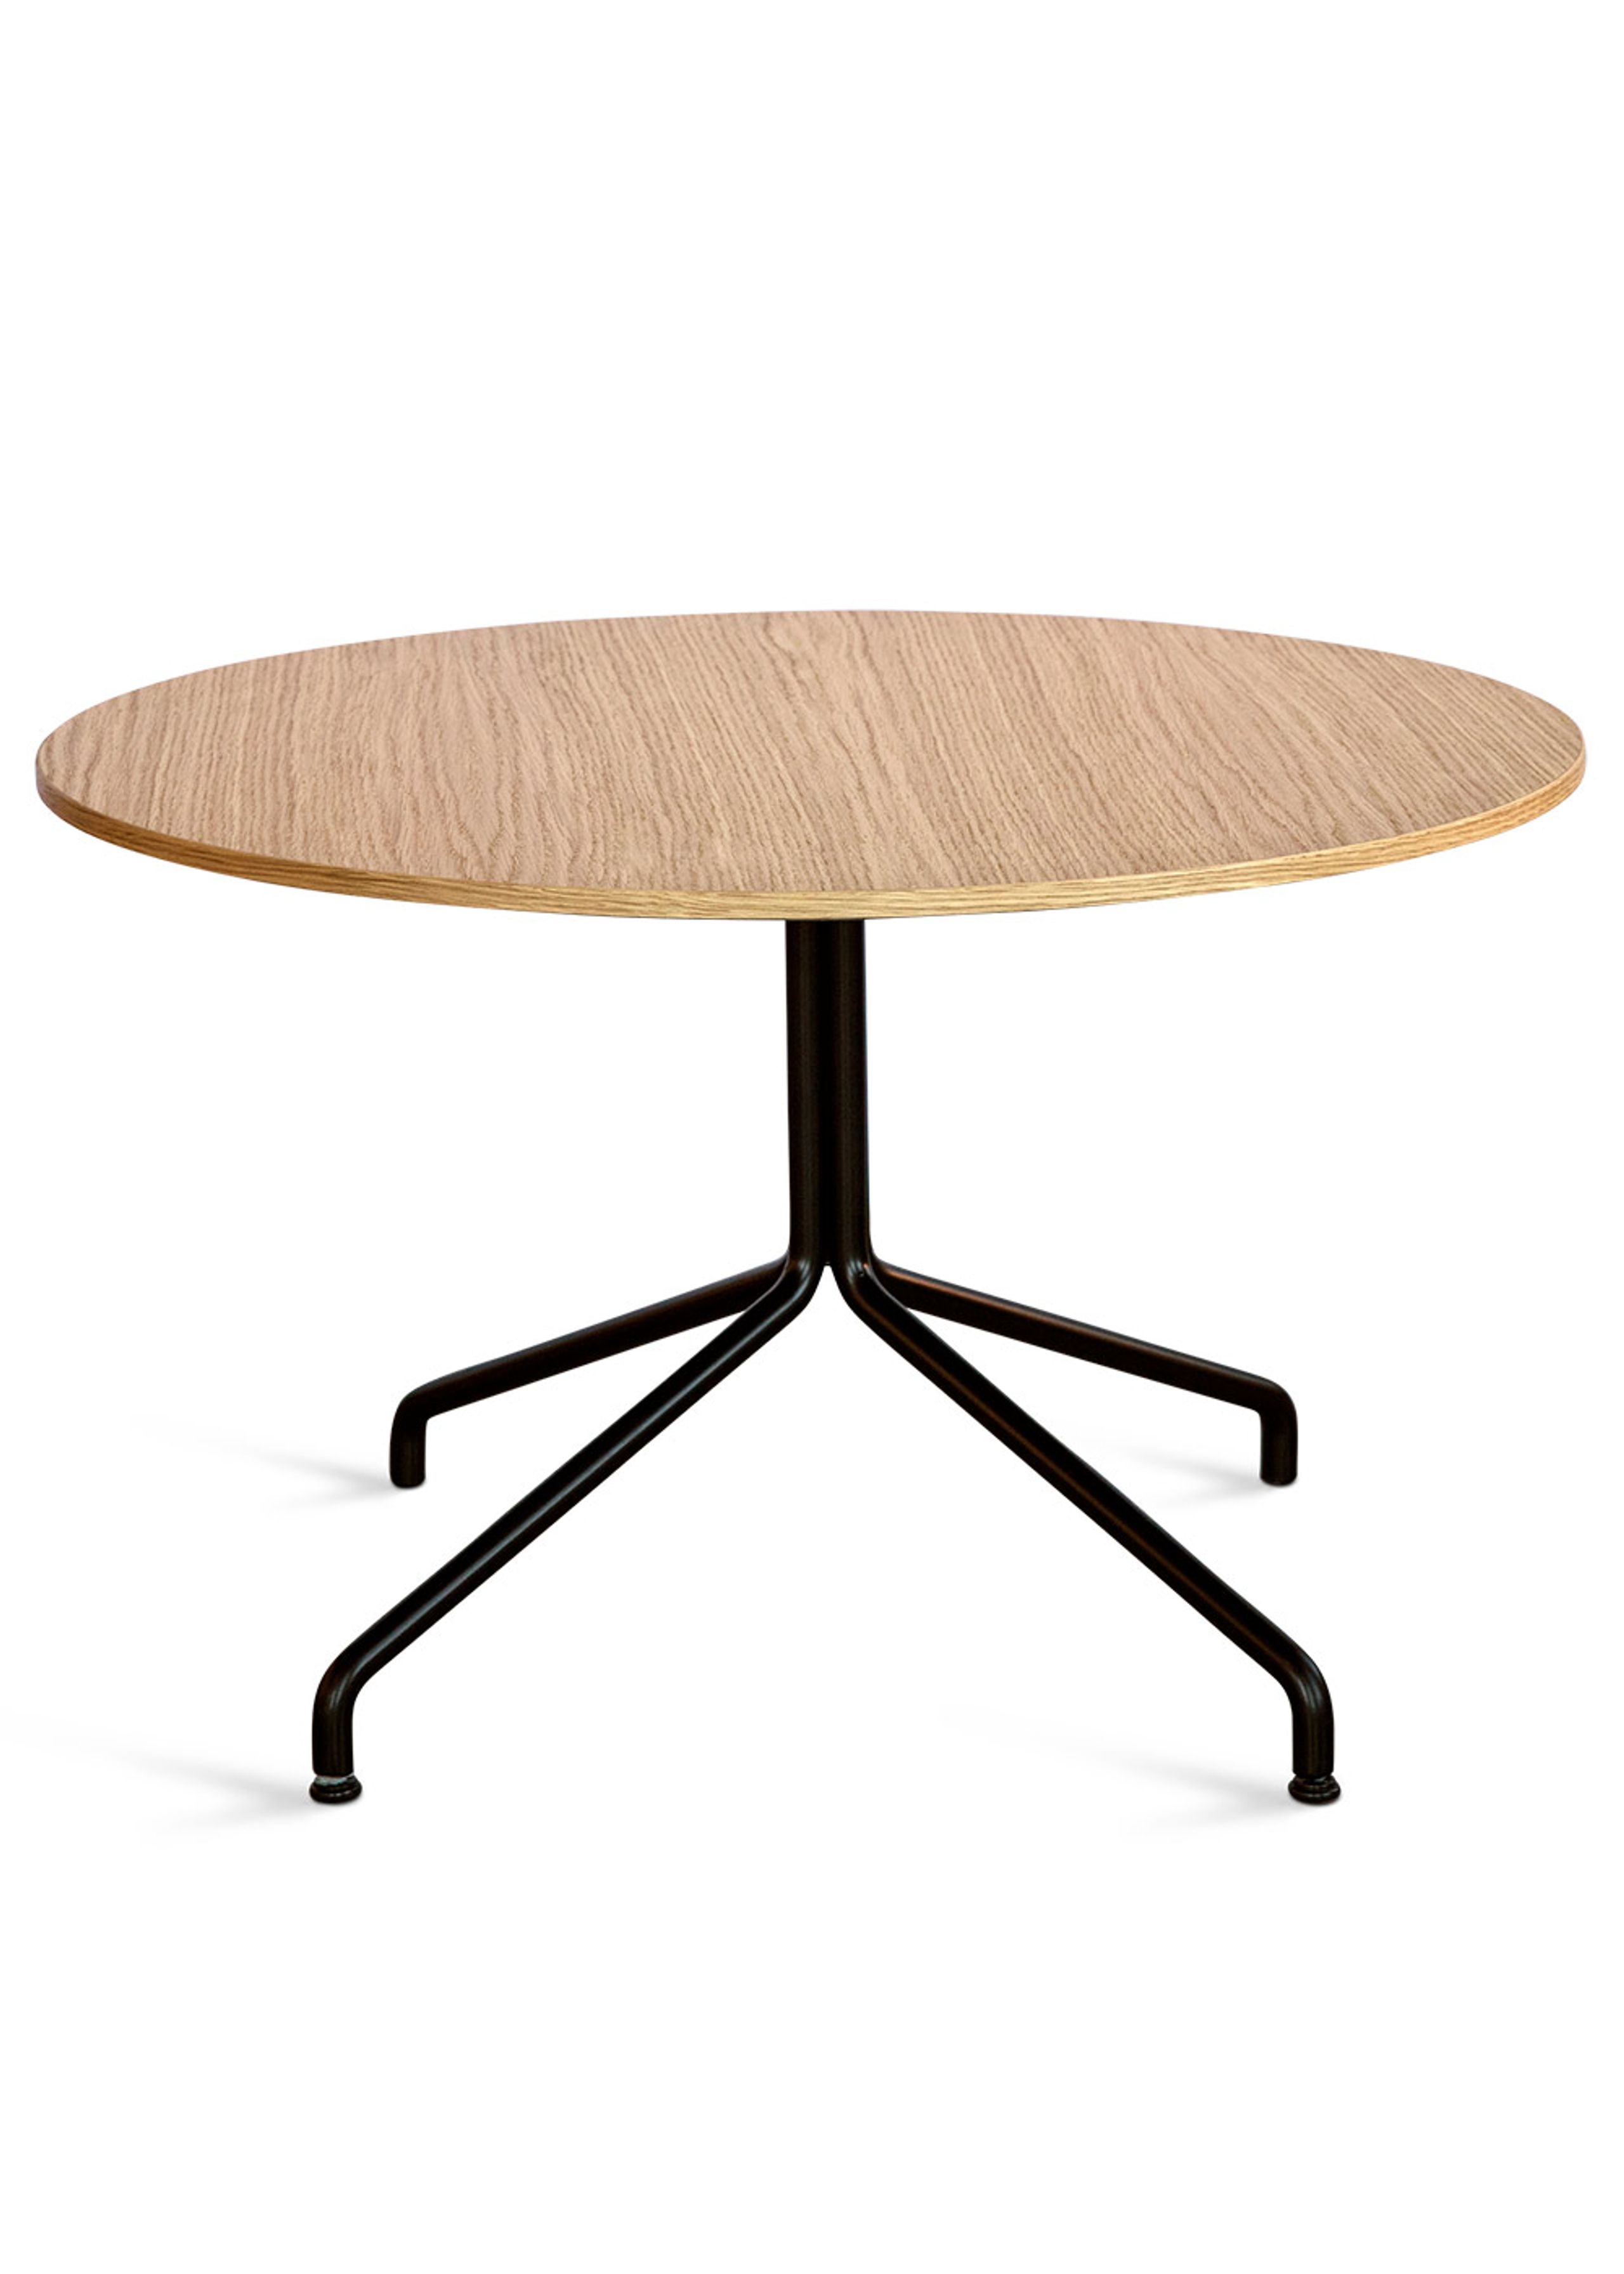 Bent Hansen - Conseil d'administration - Primum Lounge Table - Tabletop: Oak veneer